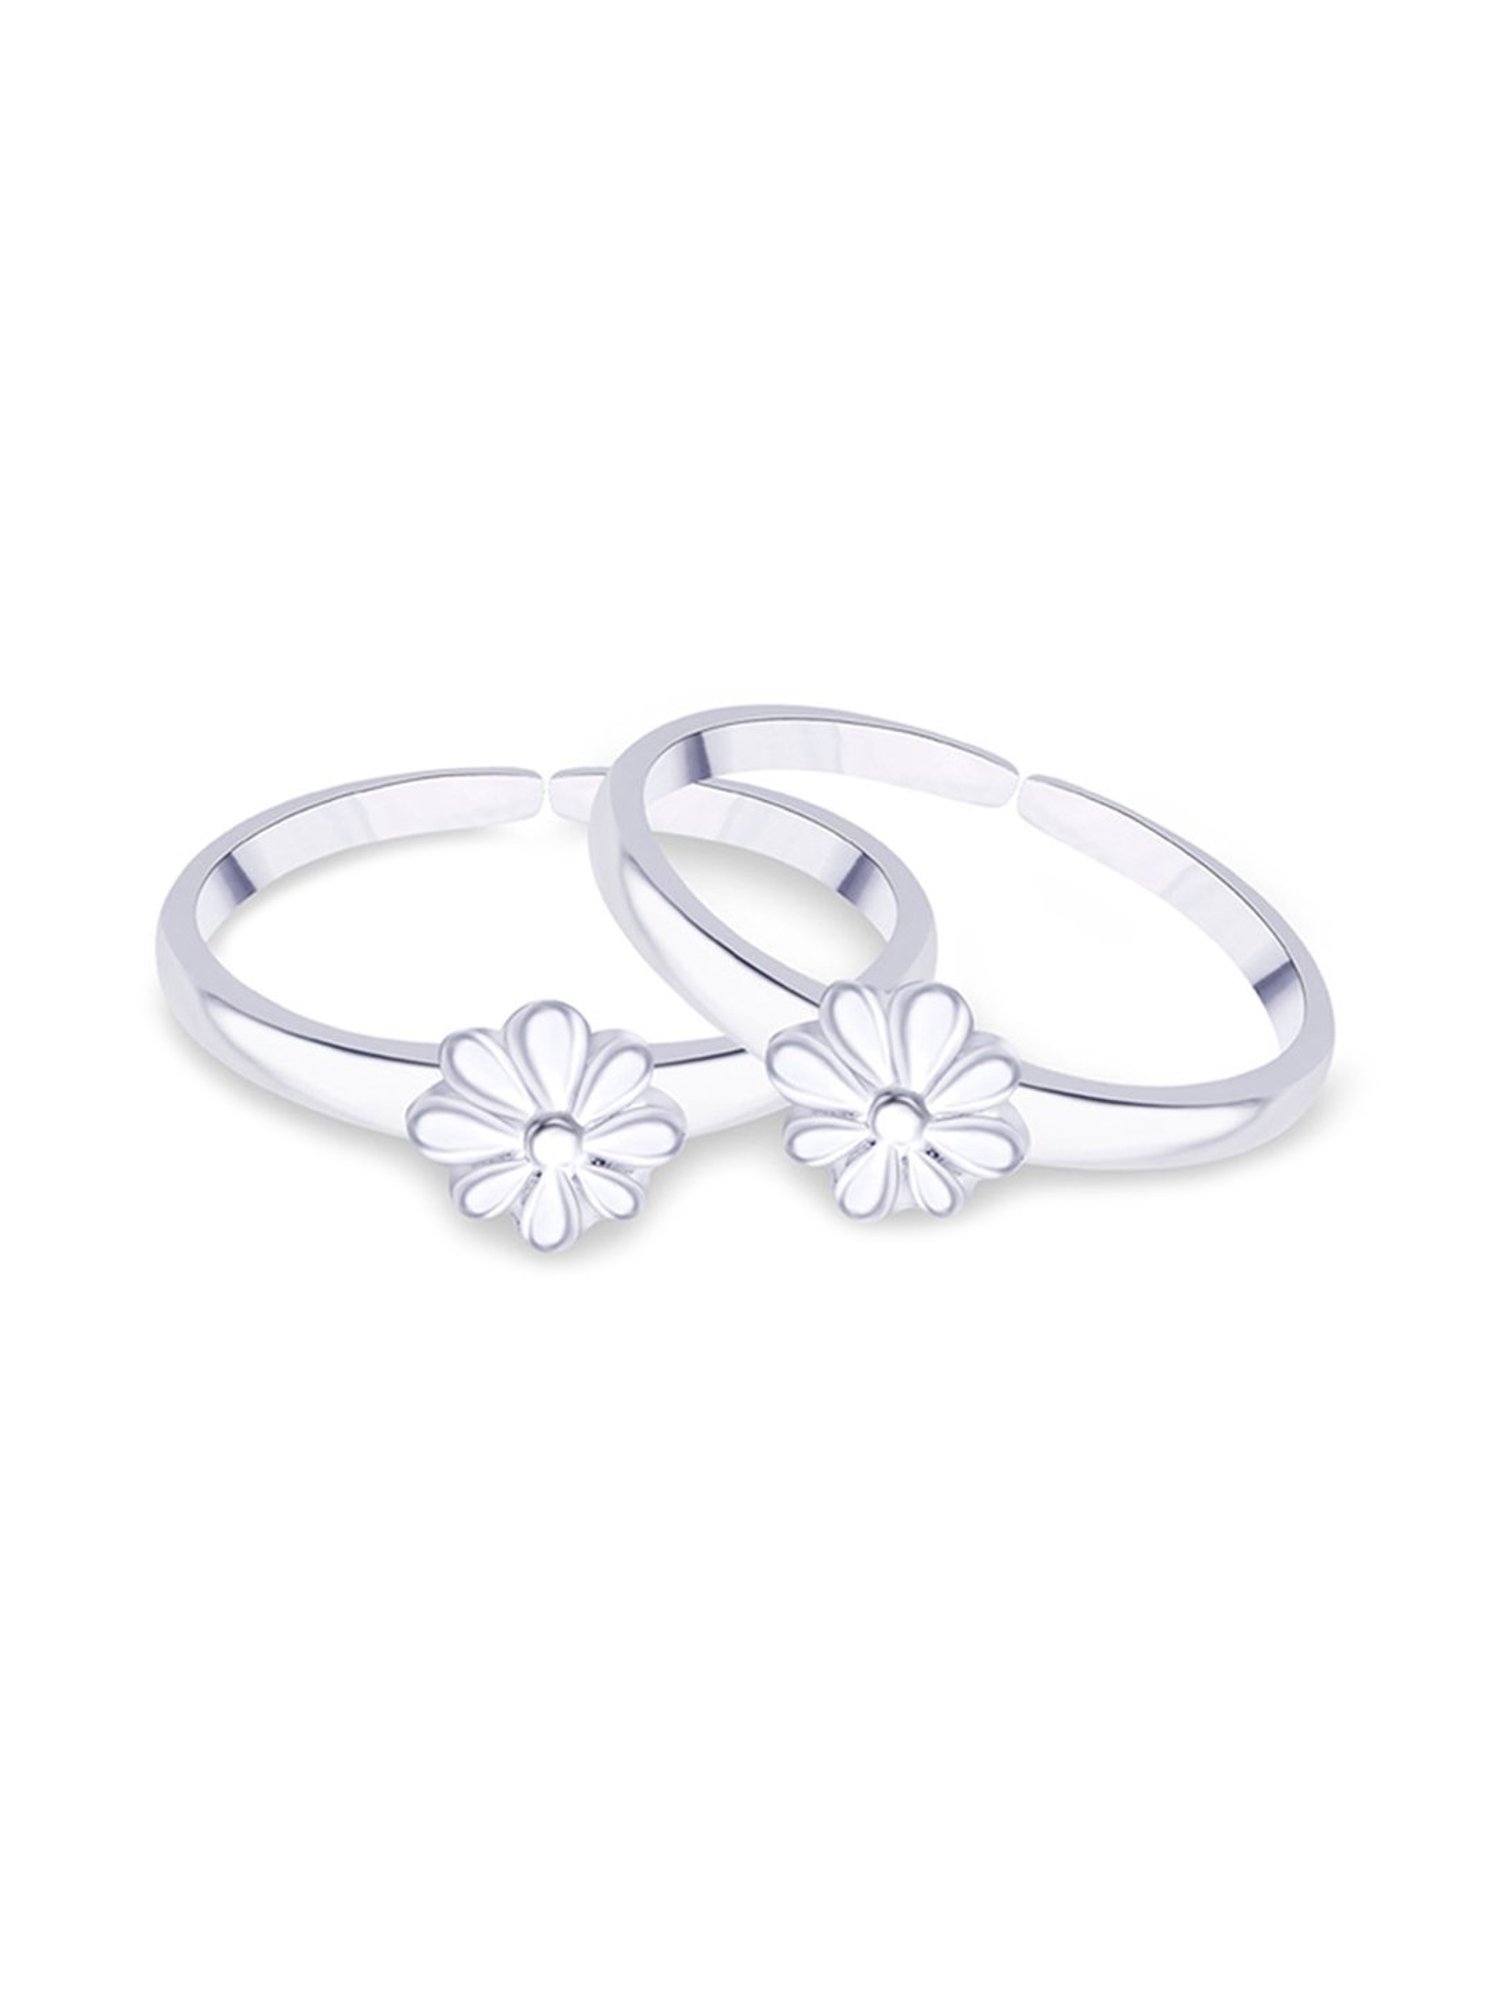 Buy Taraash Floral 92.5 Sterling Silver Toe Ring Online At Best ...